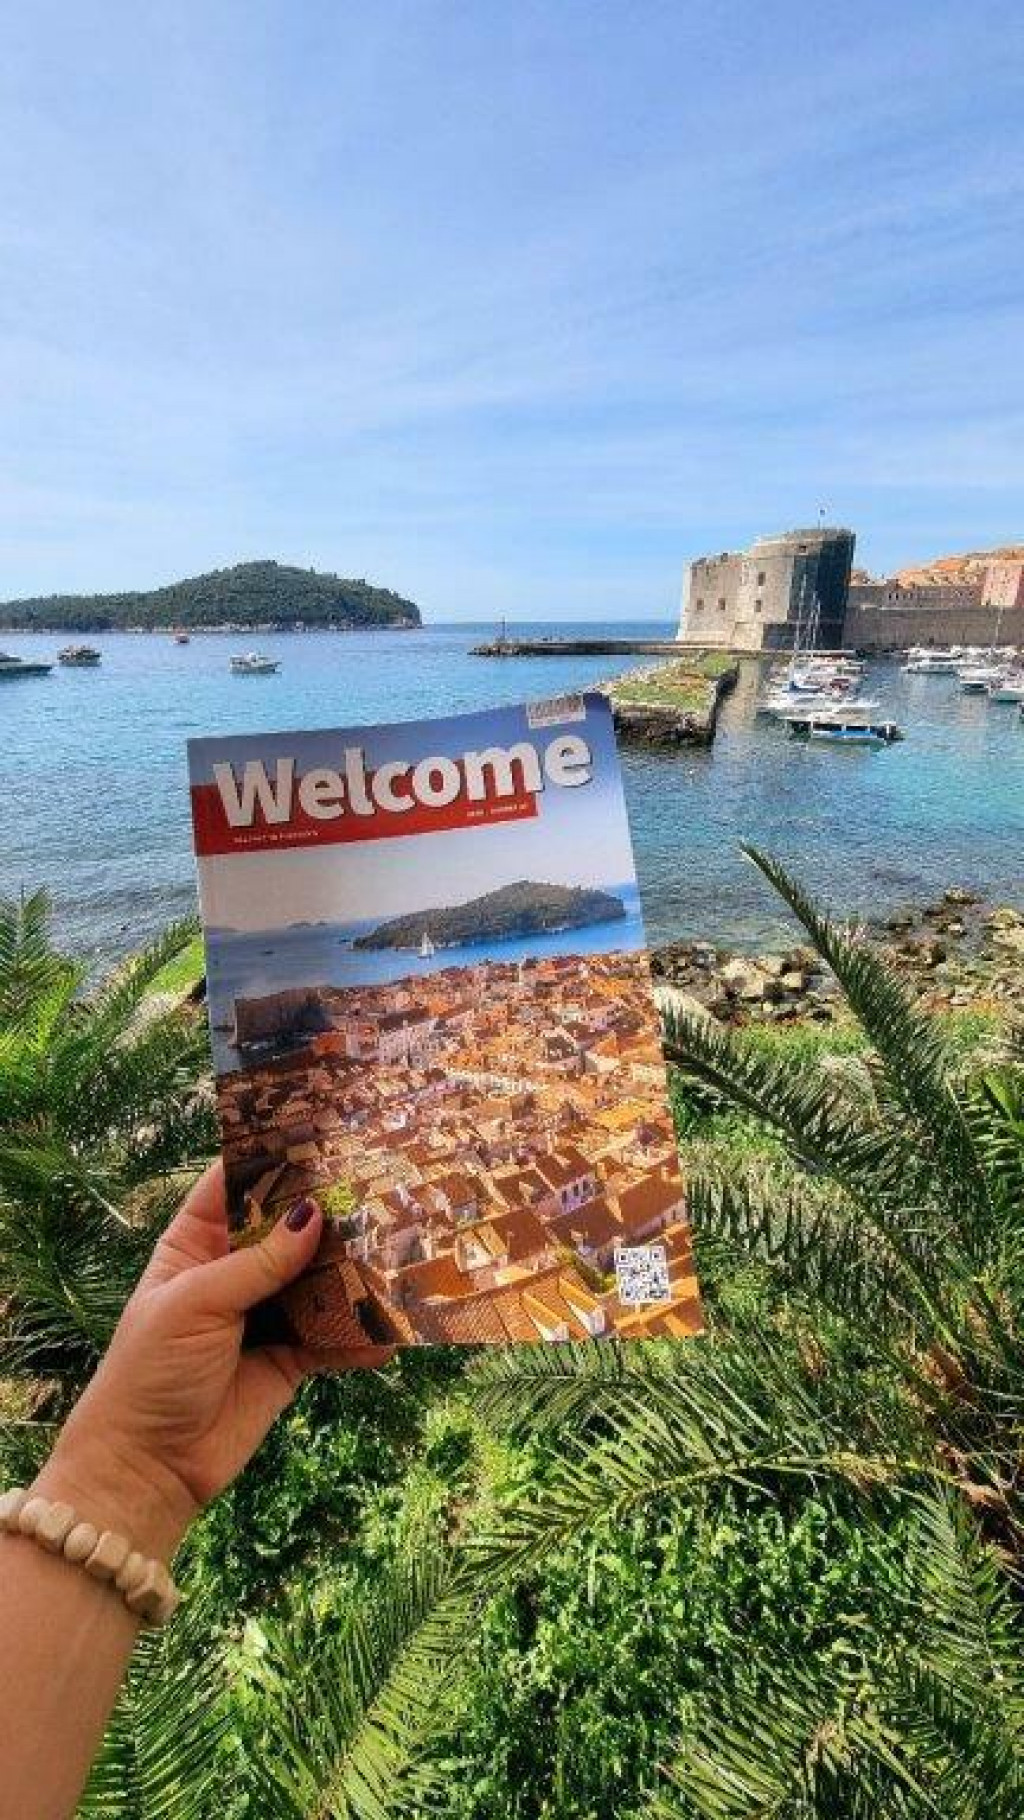 &lt;p&gt;Novi broj časopisa Wellcome to Dubrovnik&lt;/p&gt;